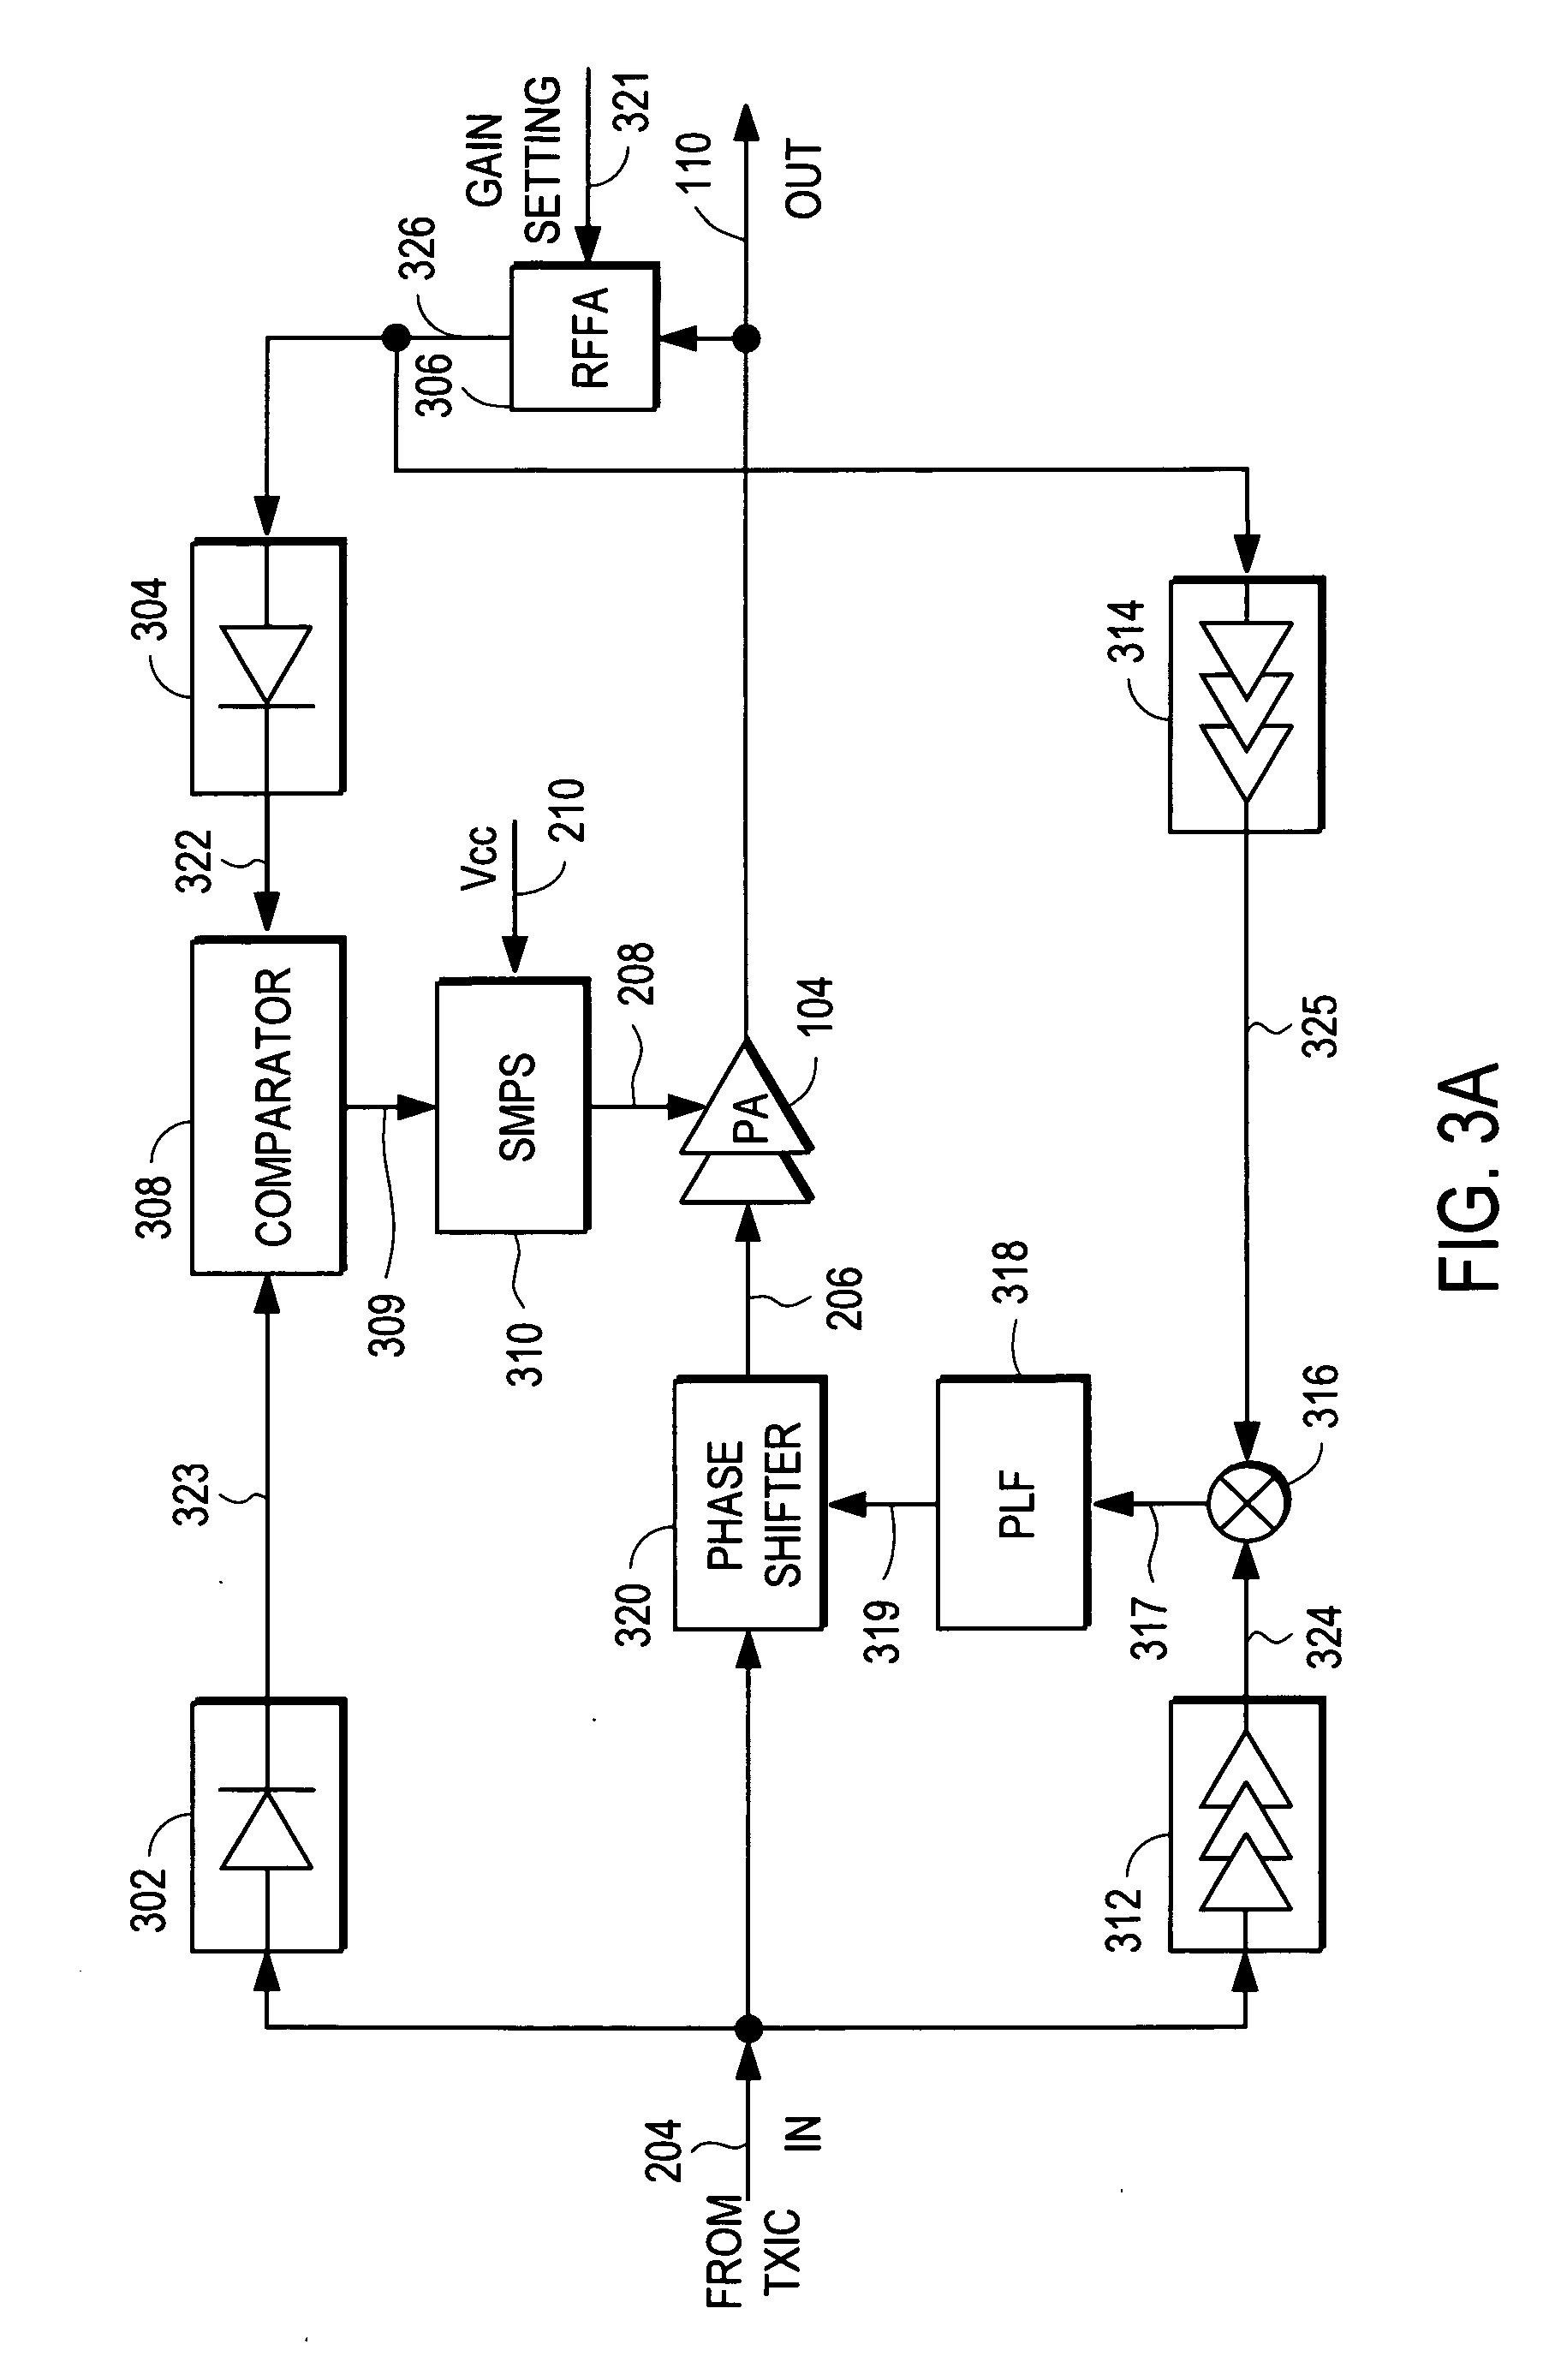 Power amplifier controller circuit